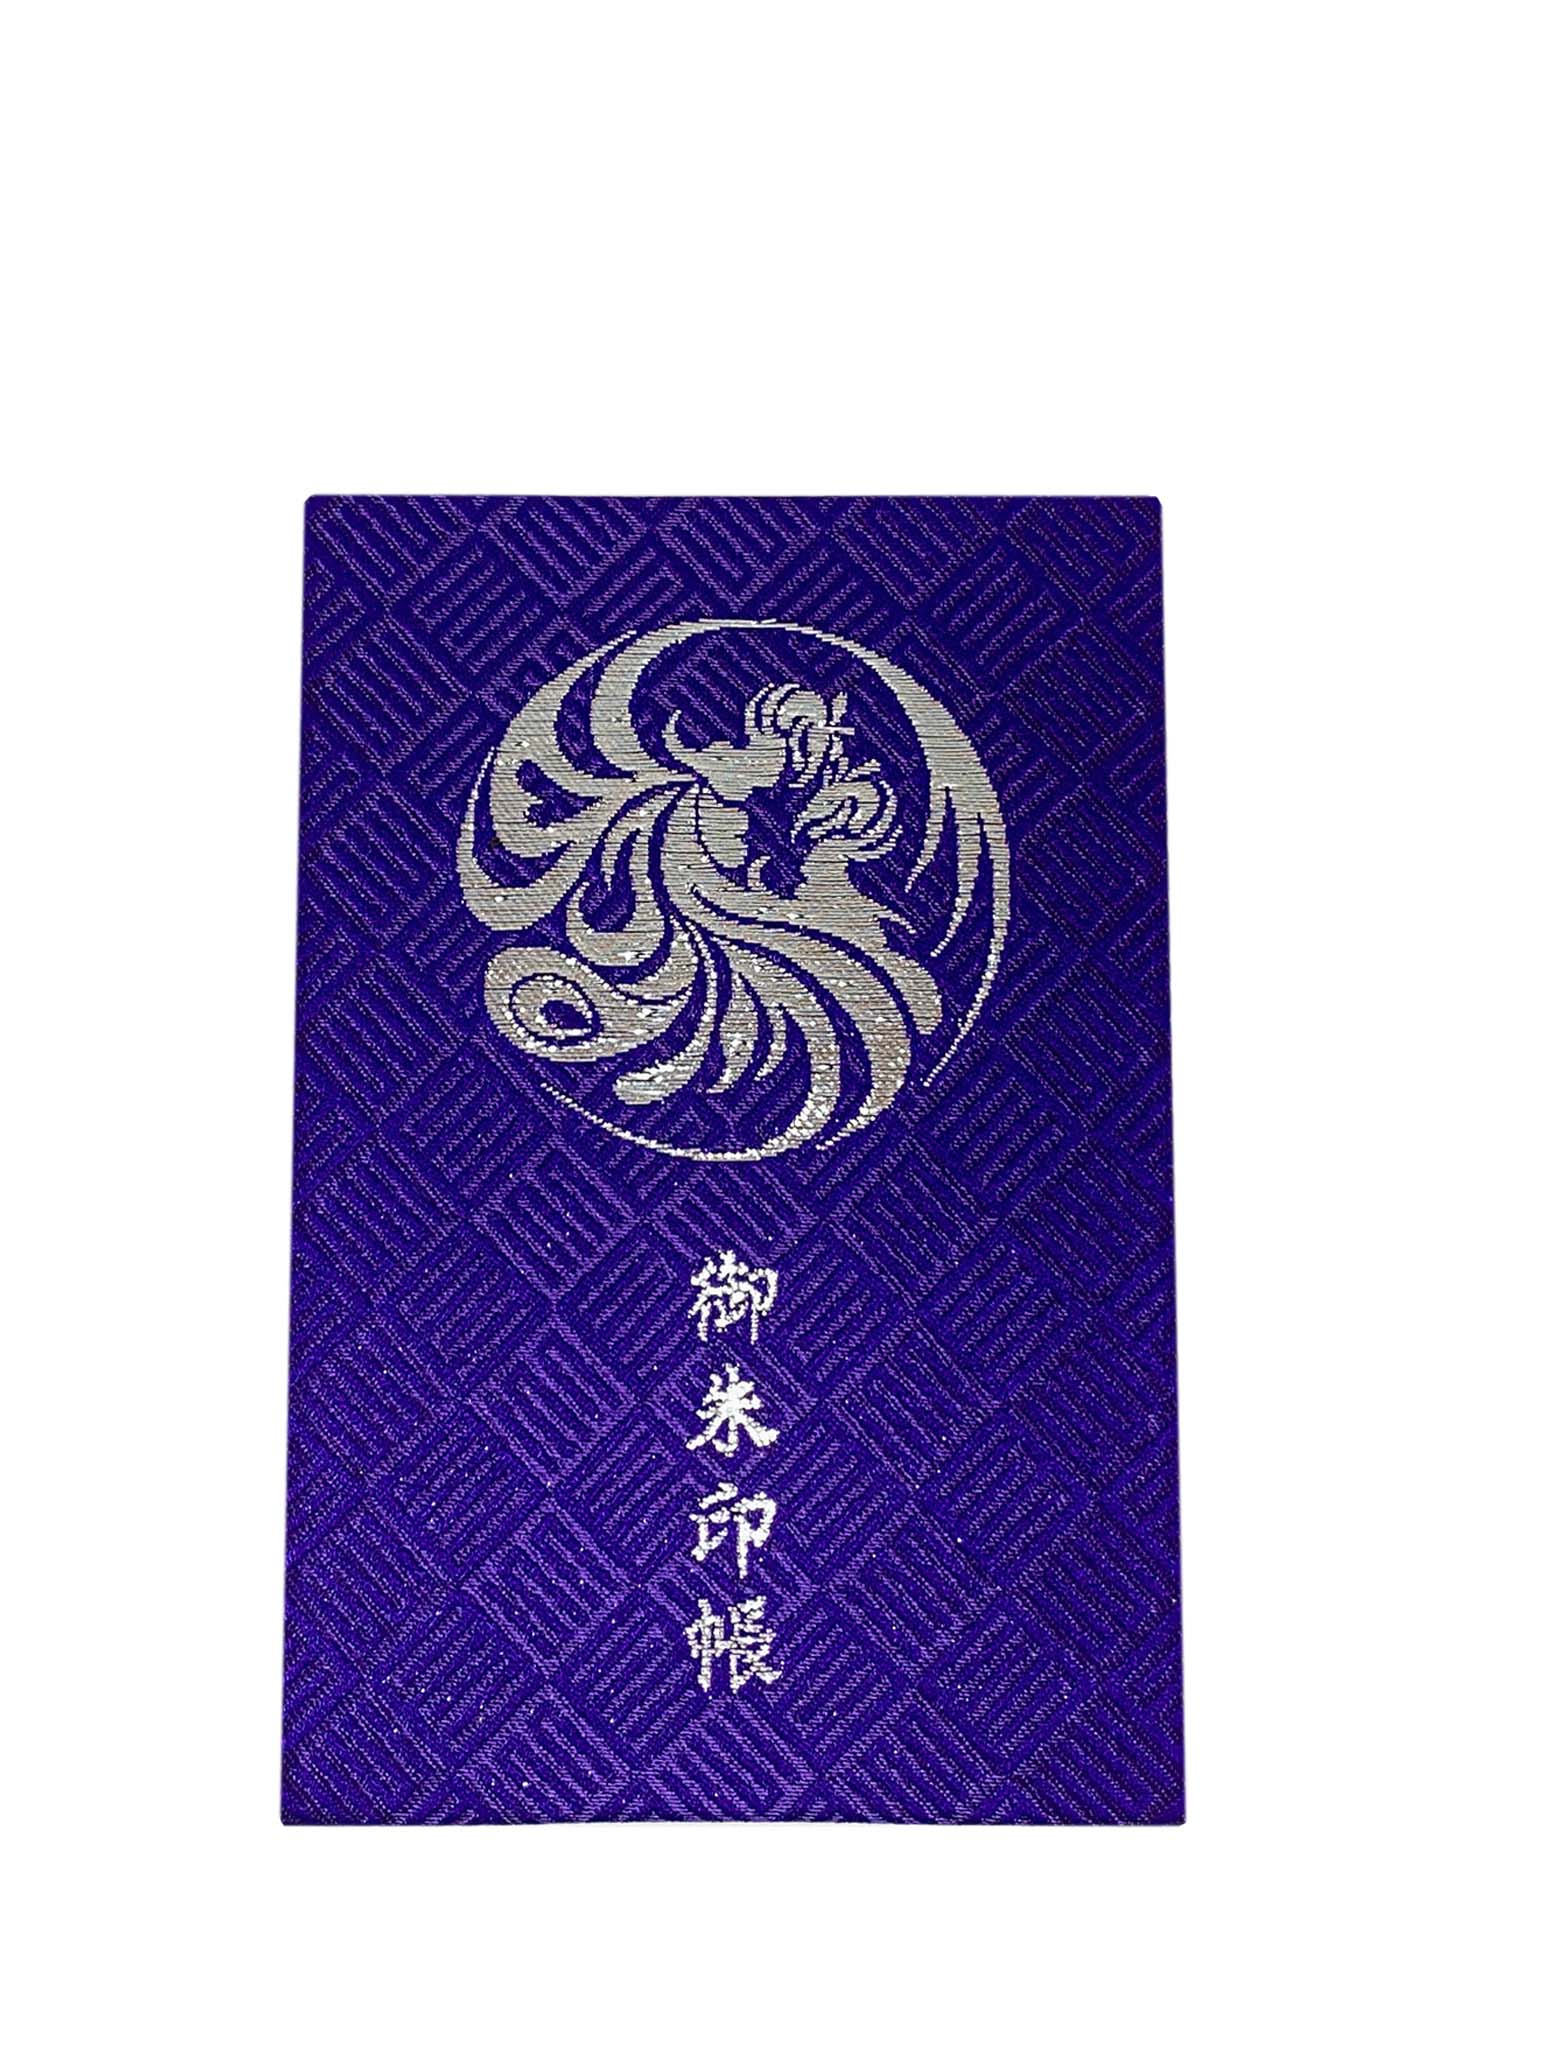 KADOKAWA公式ショップ】武蔵野坐令和神社 御朱印帳 紫: グッズ